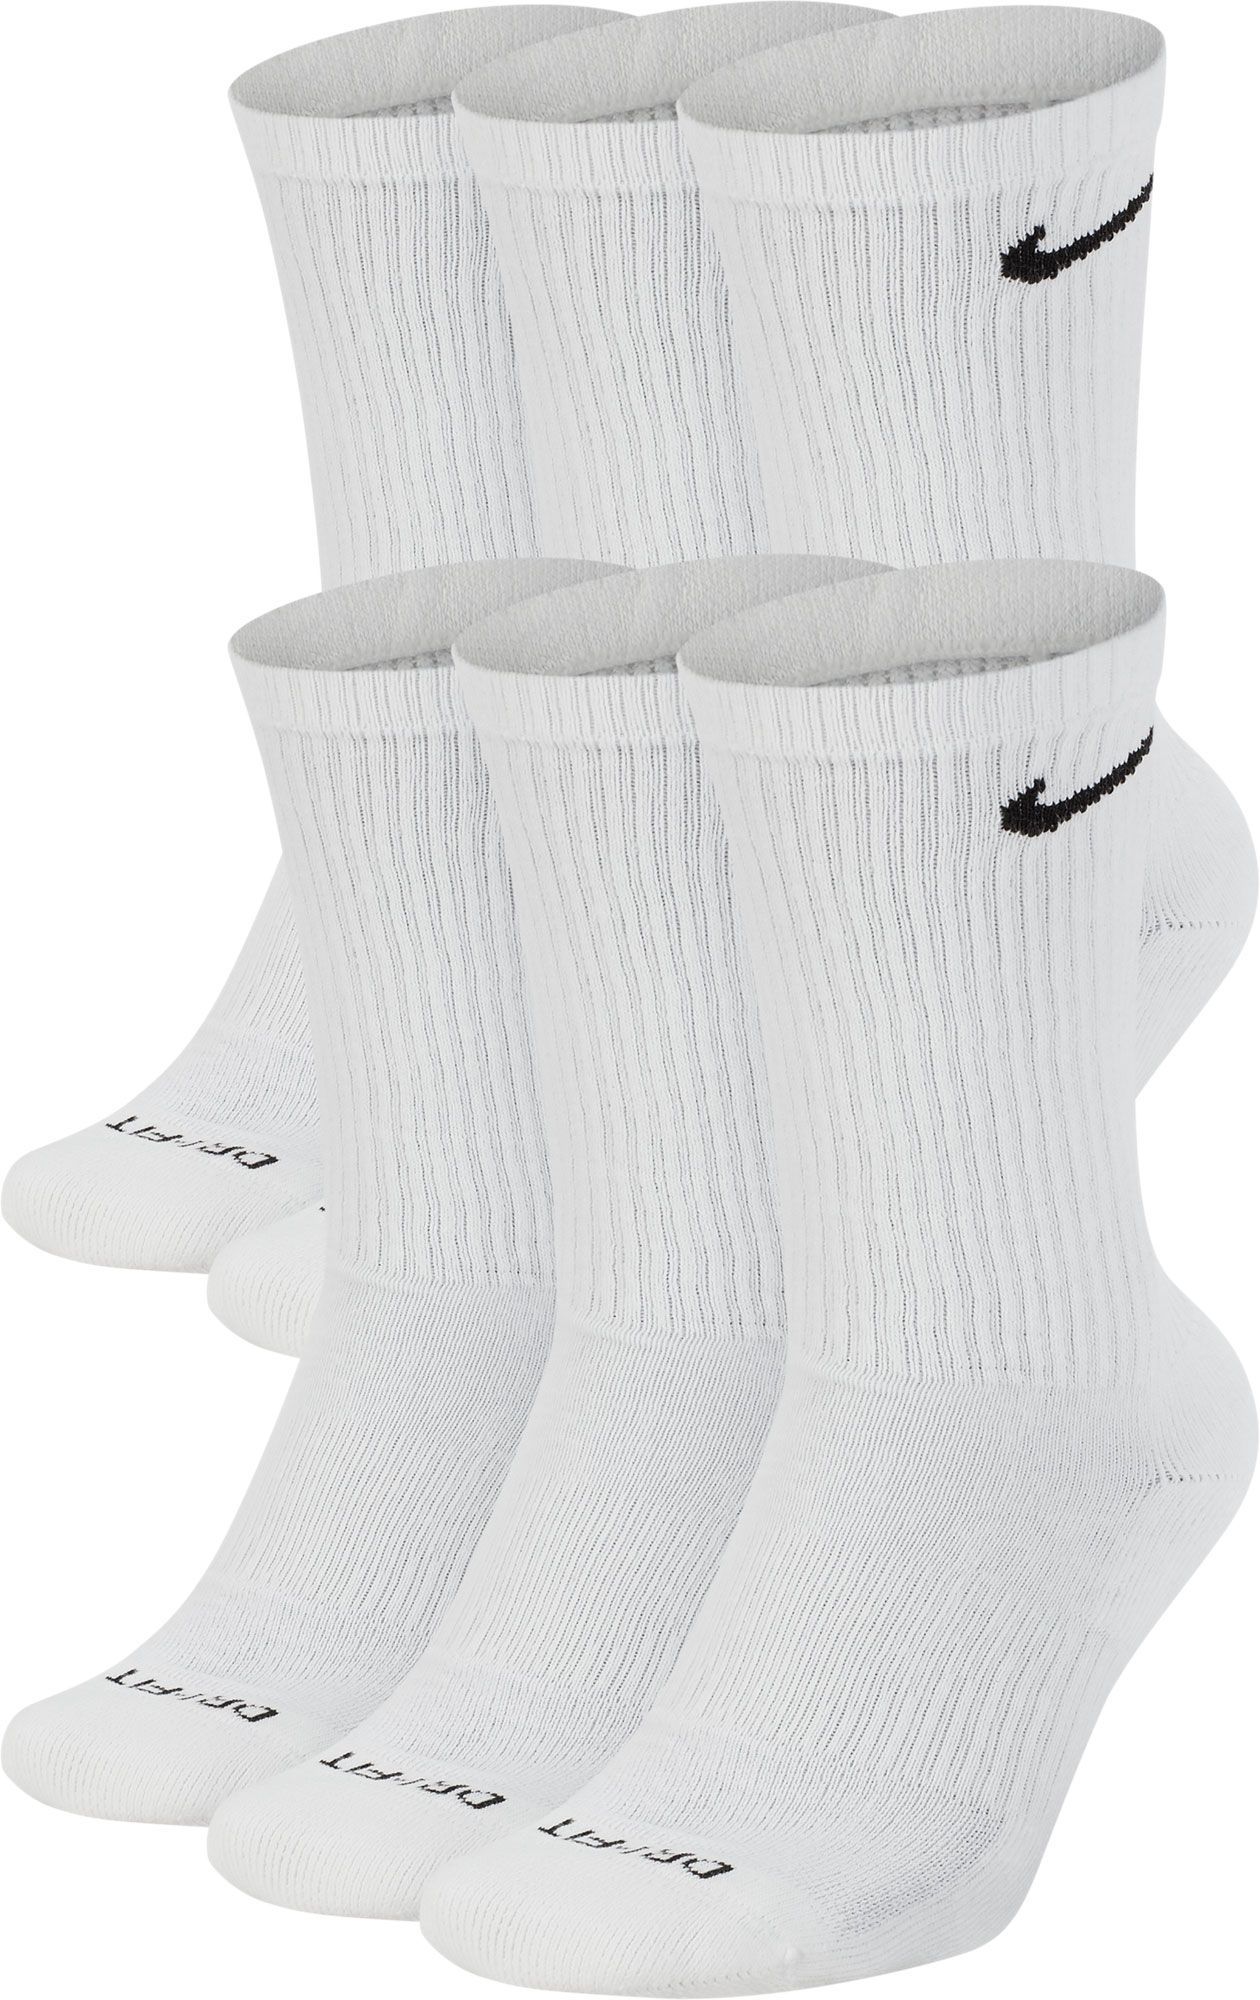 Nike Dri-FIT Everyday Plus Cushion Training Crew Socks - 6 Pack, Men's, Large, White | Dick's Sporting Goods